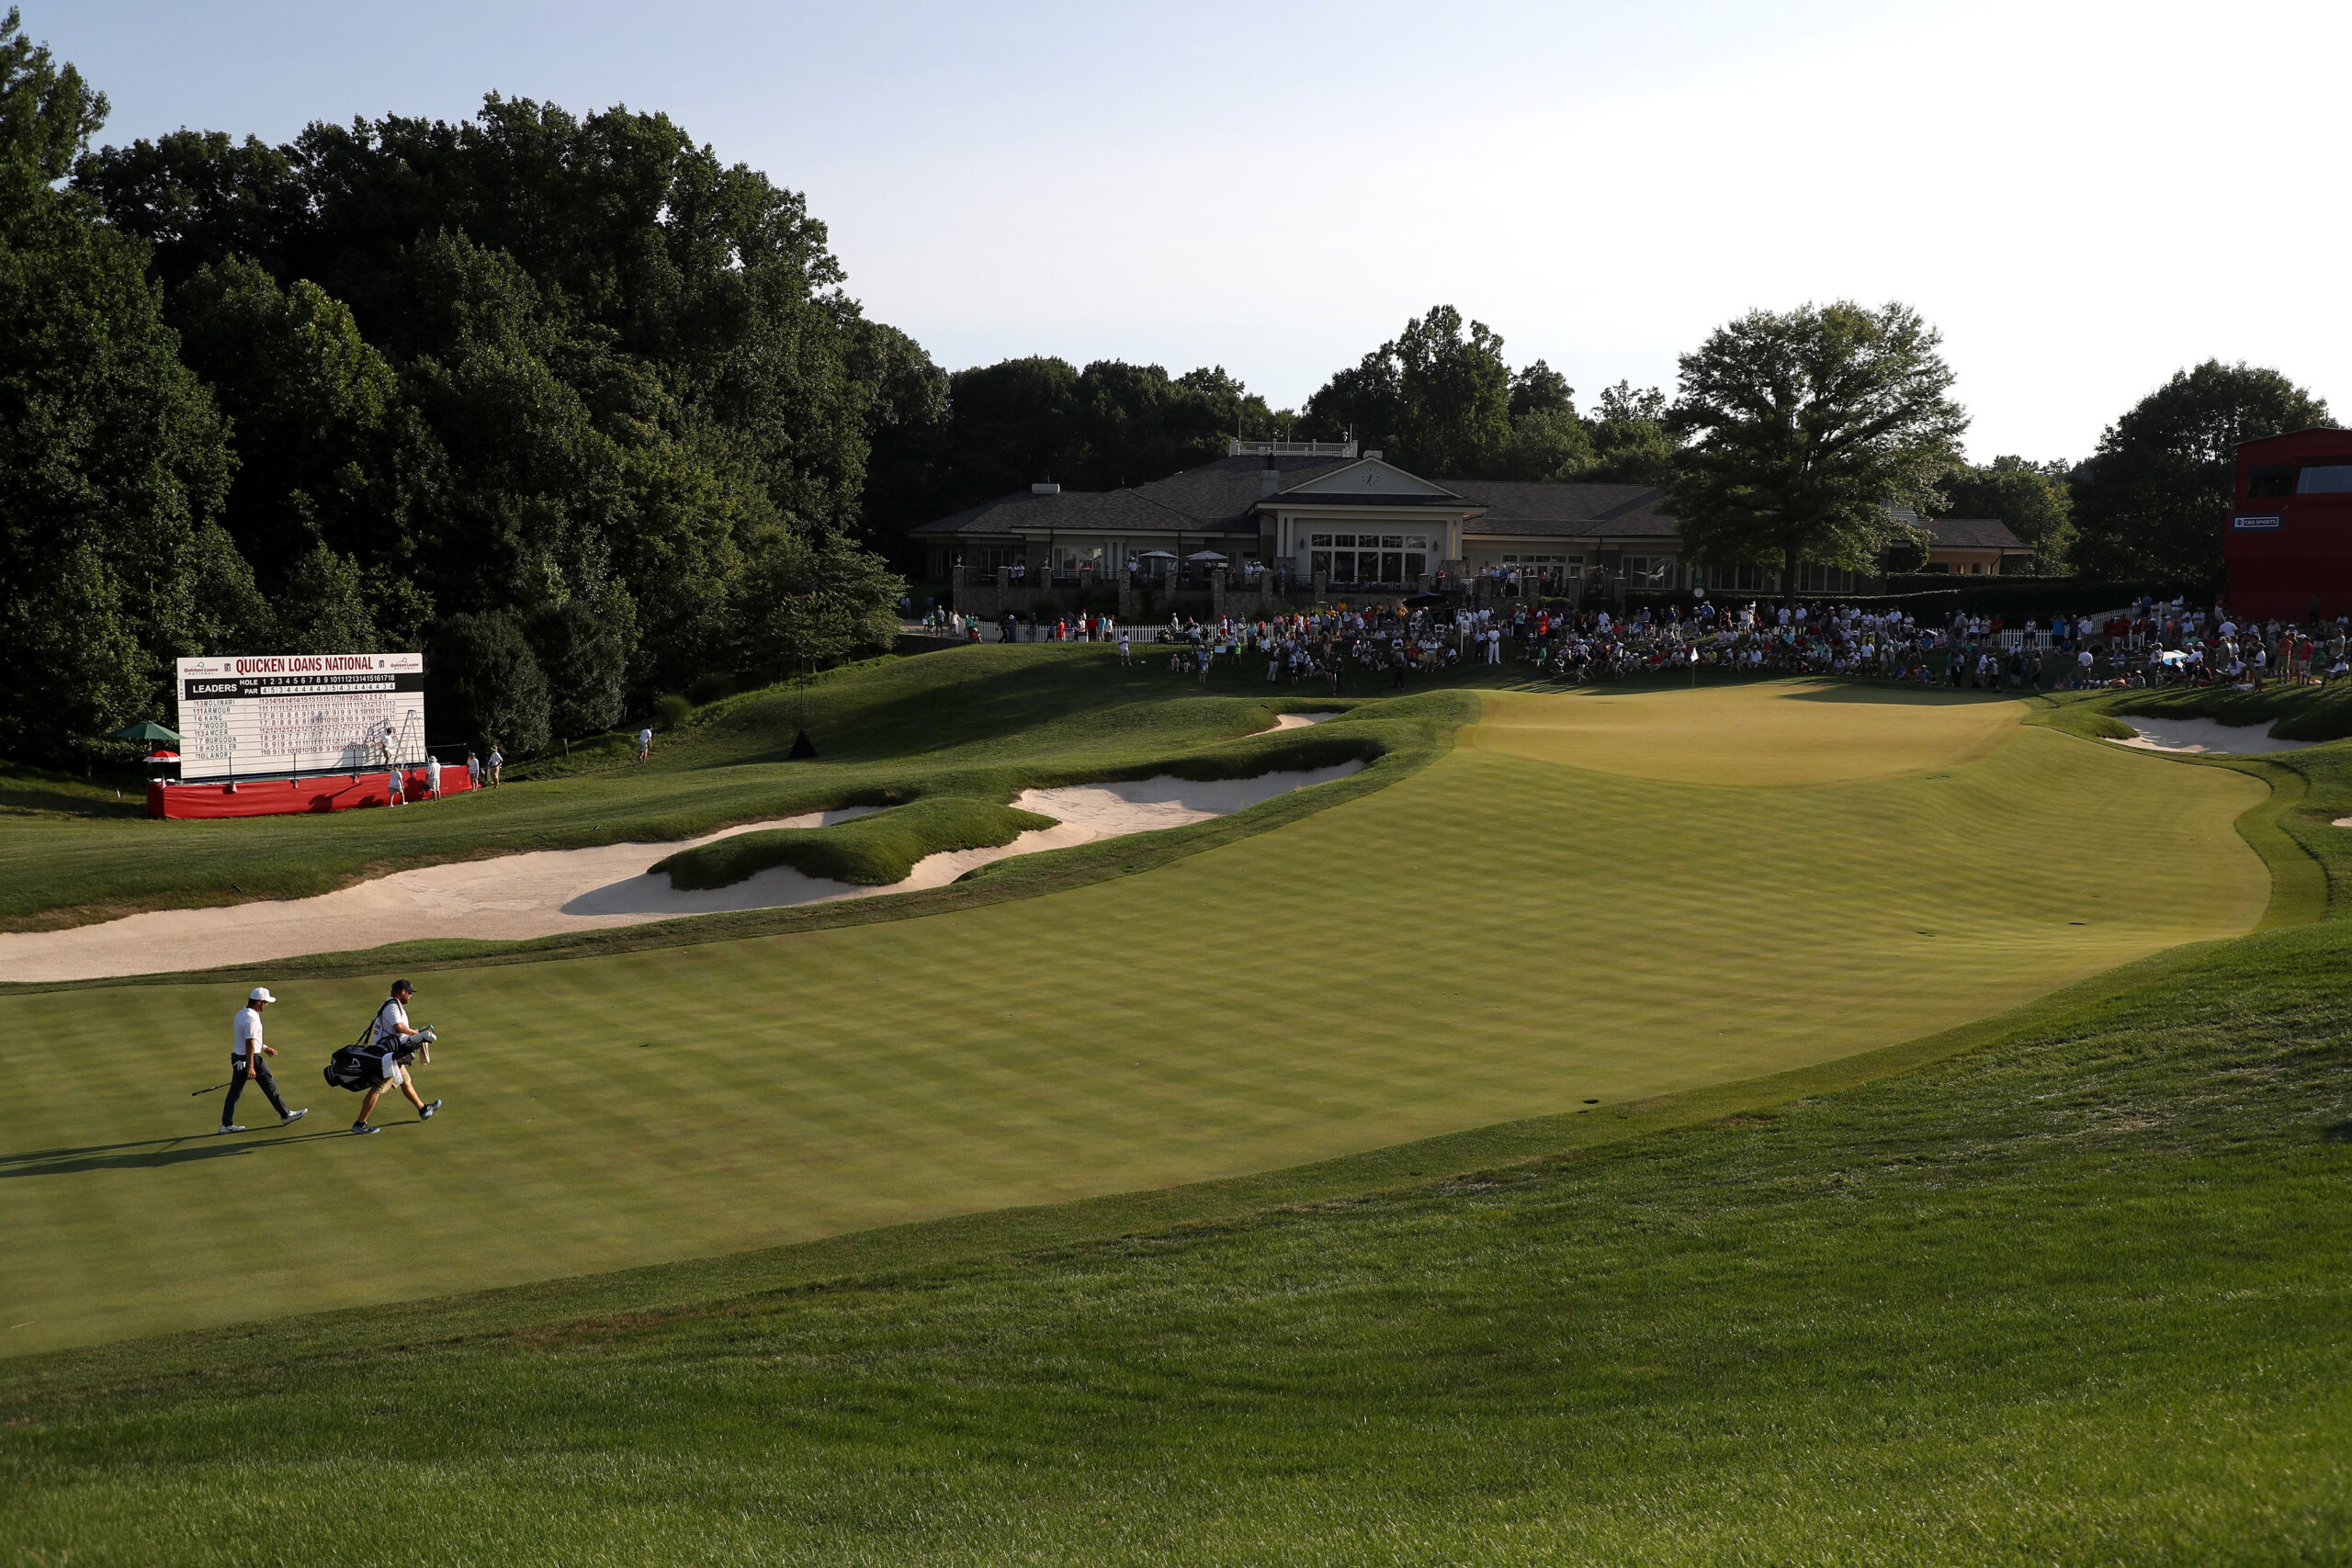 Wells Fargo Championship primer PGA Tour returns to DC region with